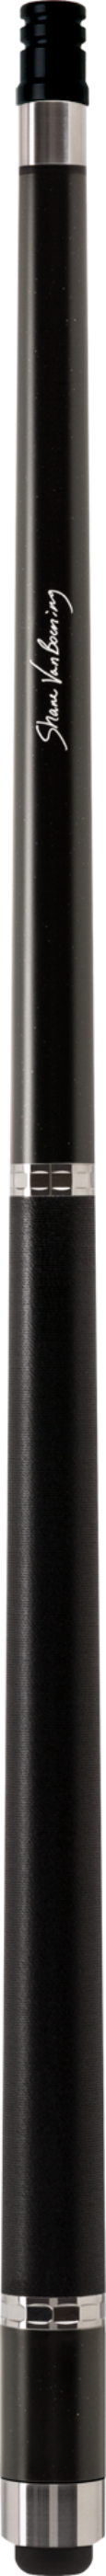 Cynergy Black Sparkle 95-130 -Cuetec